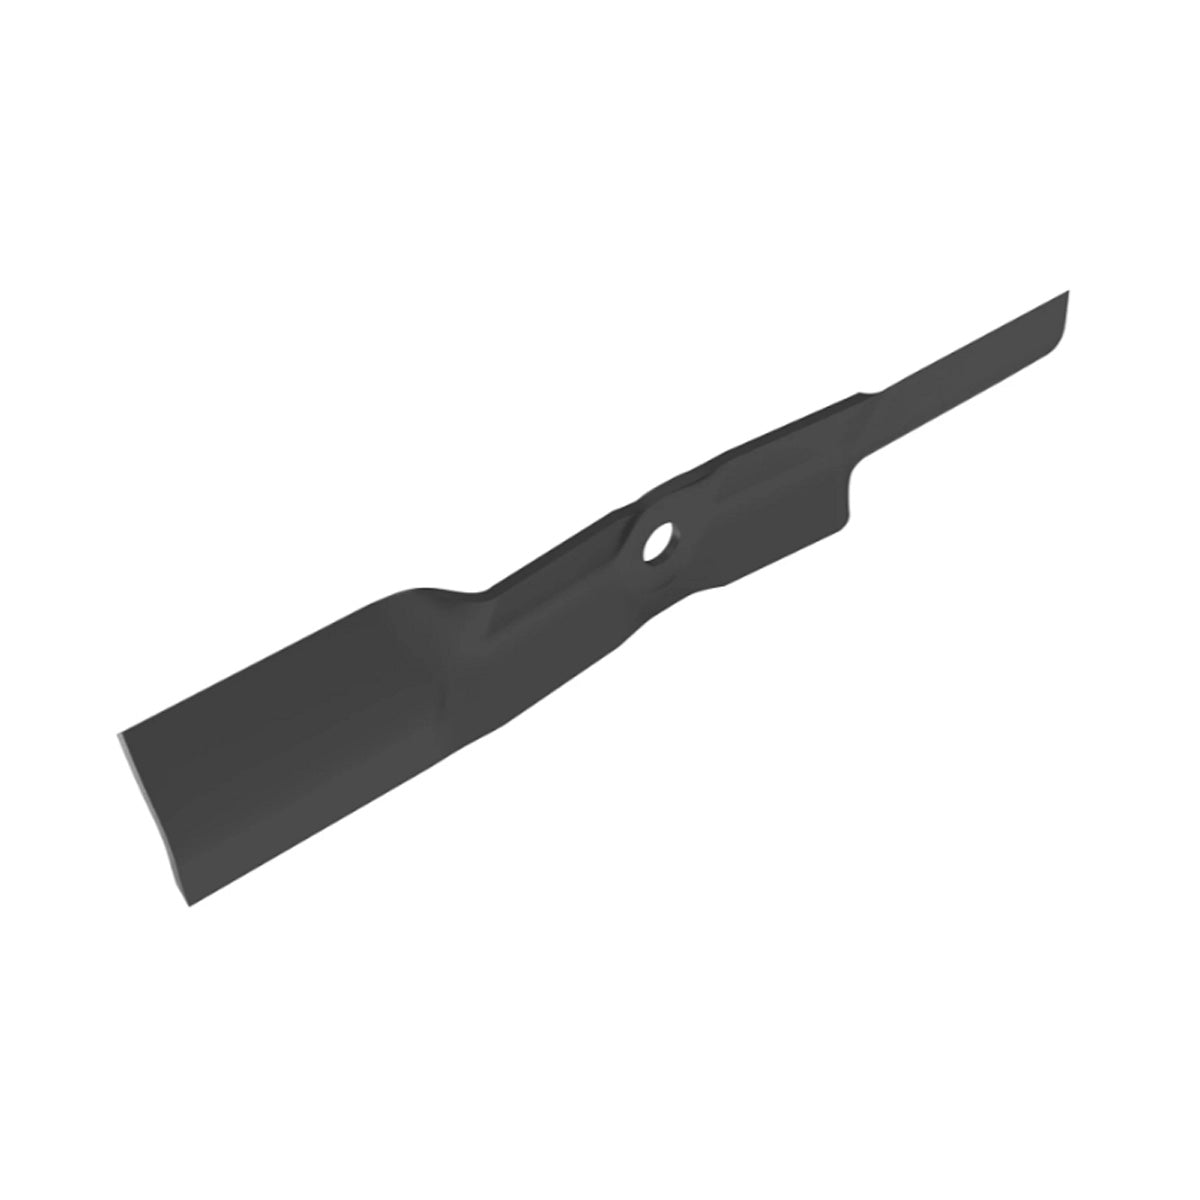 John Deere Mower Blade (Bagging) for GT, GX, LX, X300, X500, X700 & Z400 Series with 54" Deck - M152726